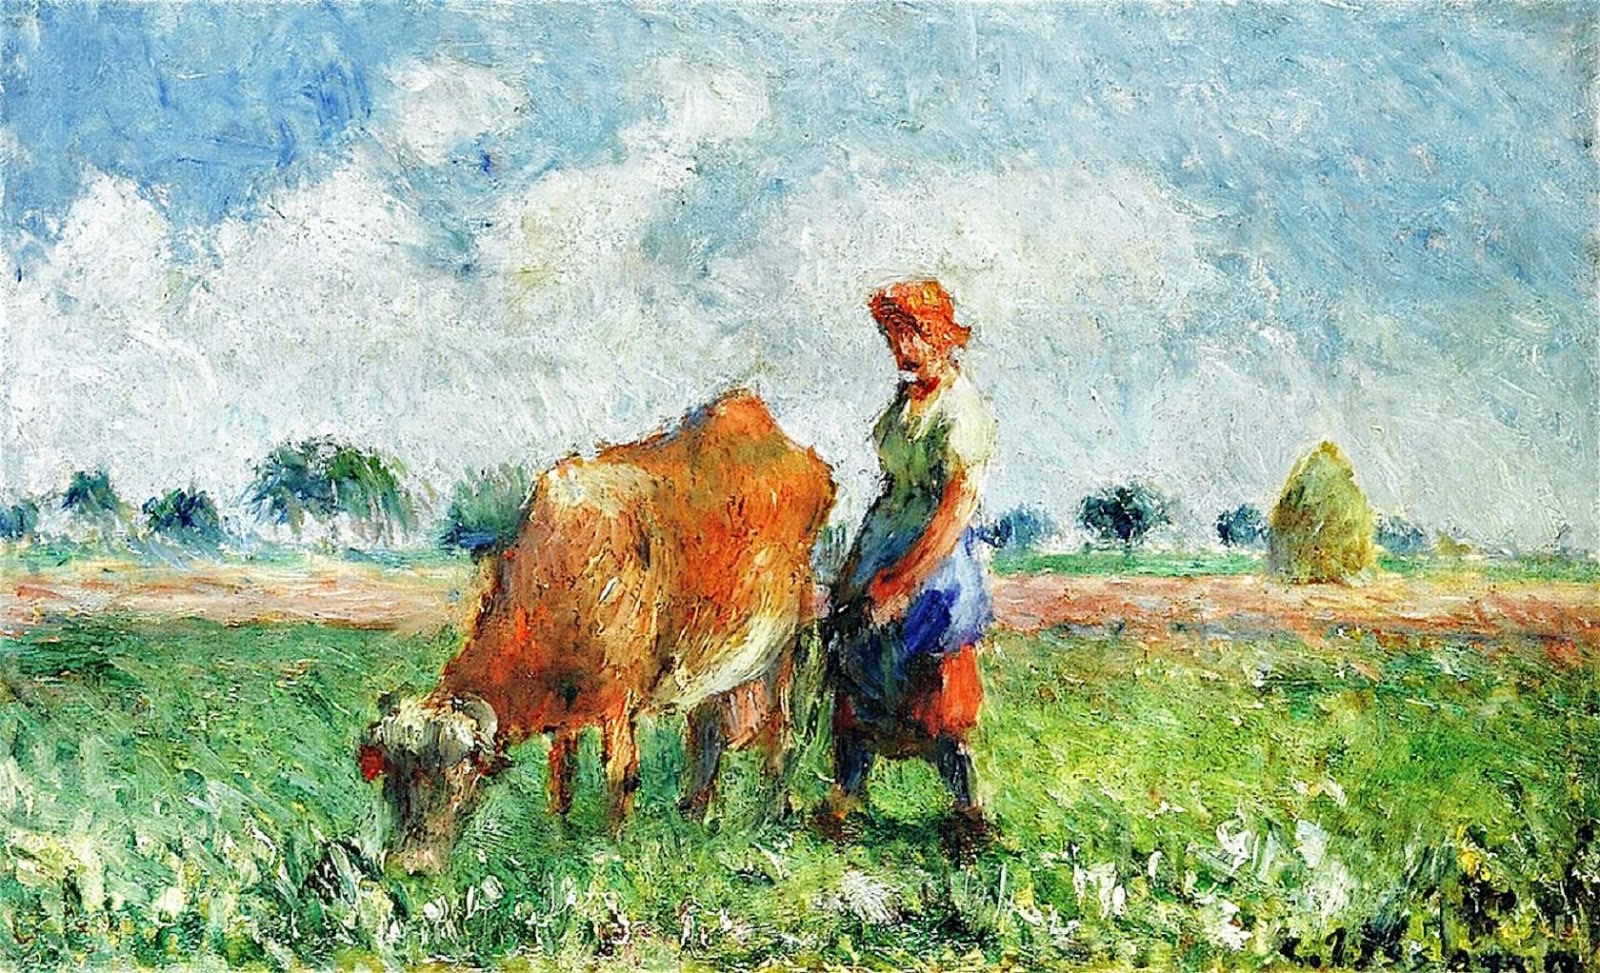 Camille+Pissarro-1830-1903 (371).jpg